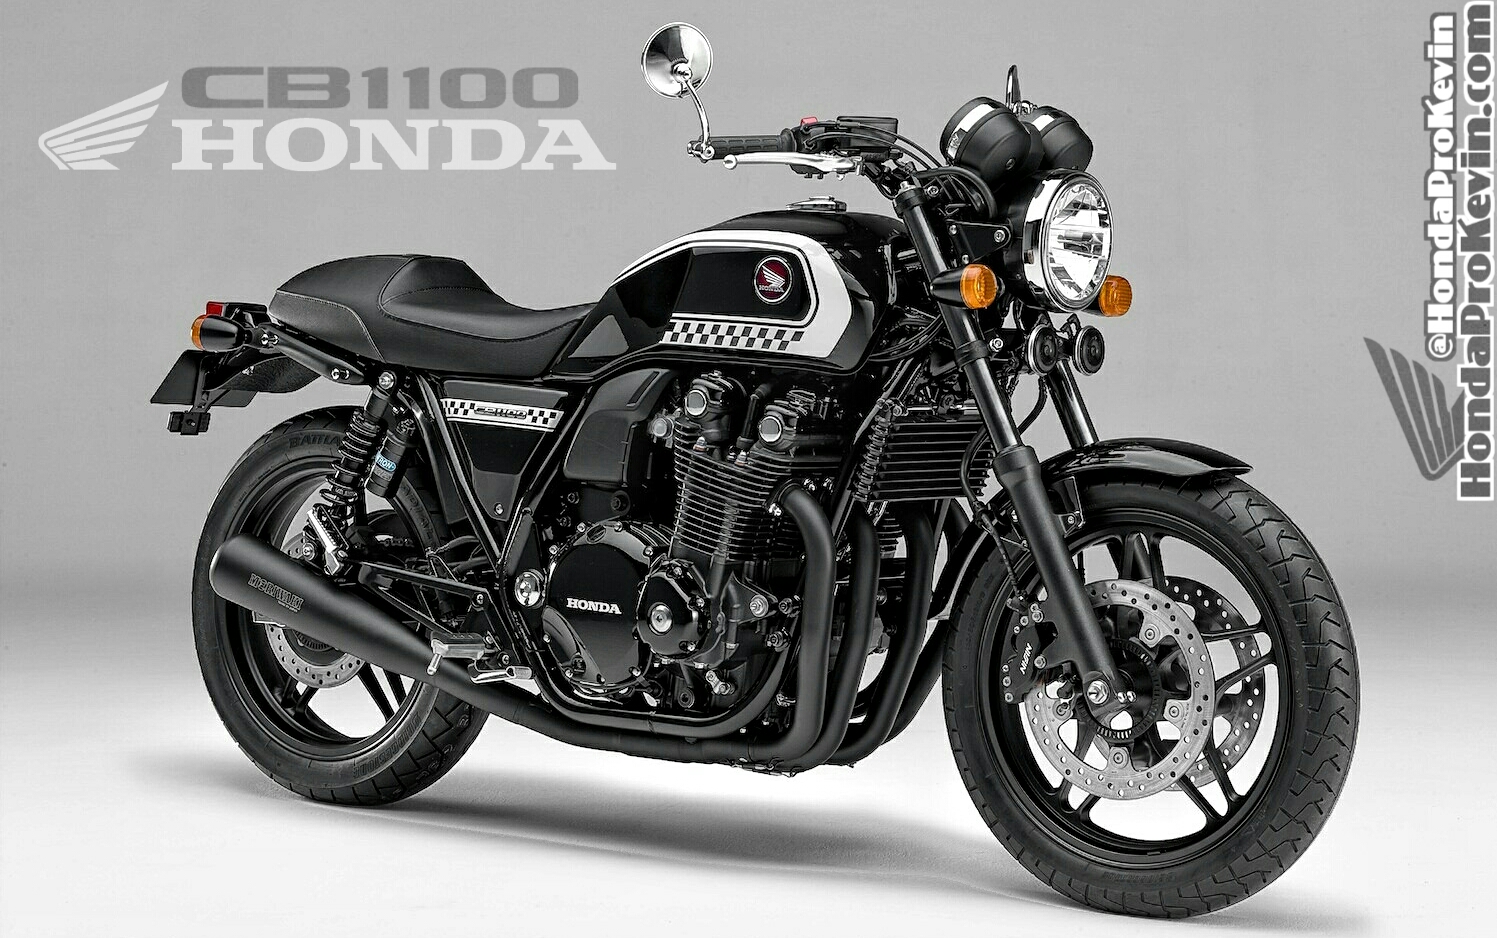 2016 Honda Cb1100 Info / Custom Concept Motorcycle - Dominar 400 Price In Jaipur , HD Wallpaper & Backgrounds